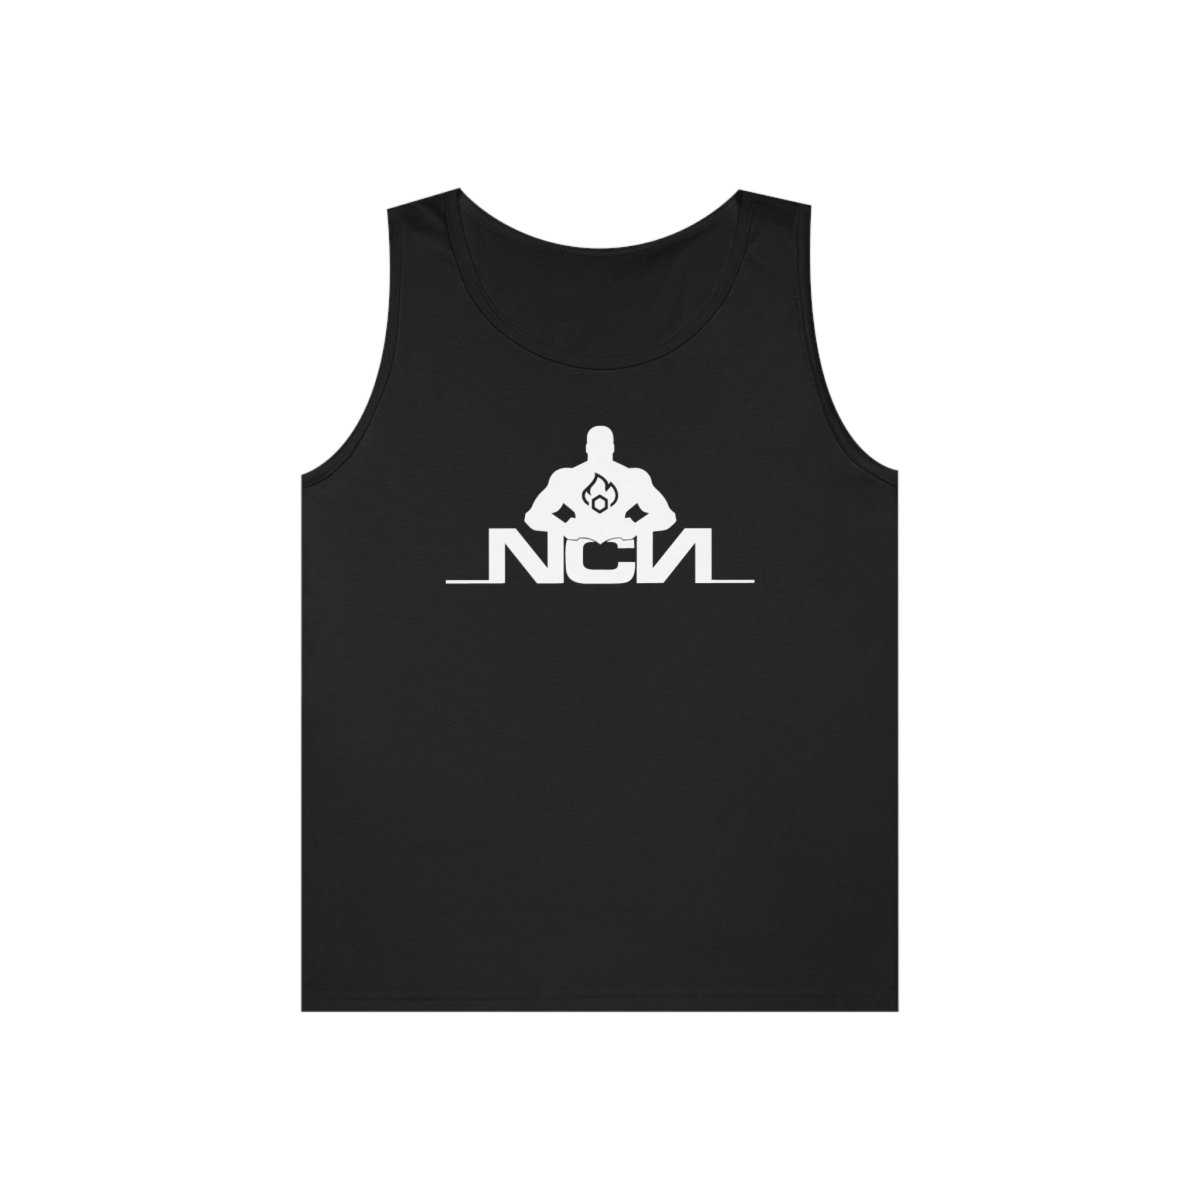 NCN Tank Top - NCN SuppsCottonDTGMen's Clothing